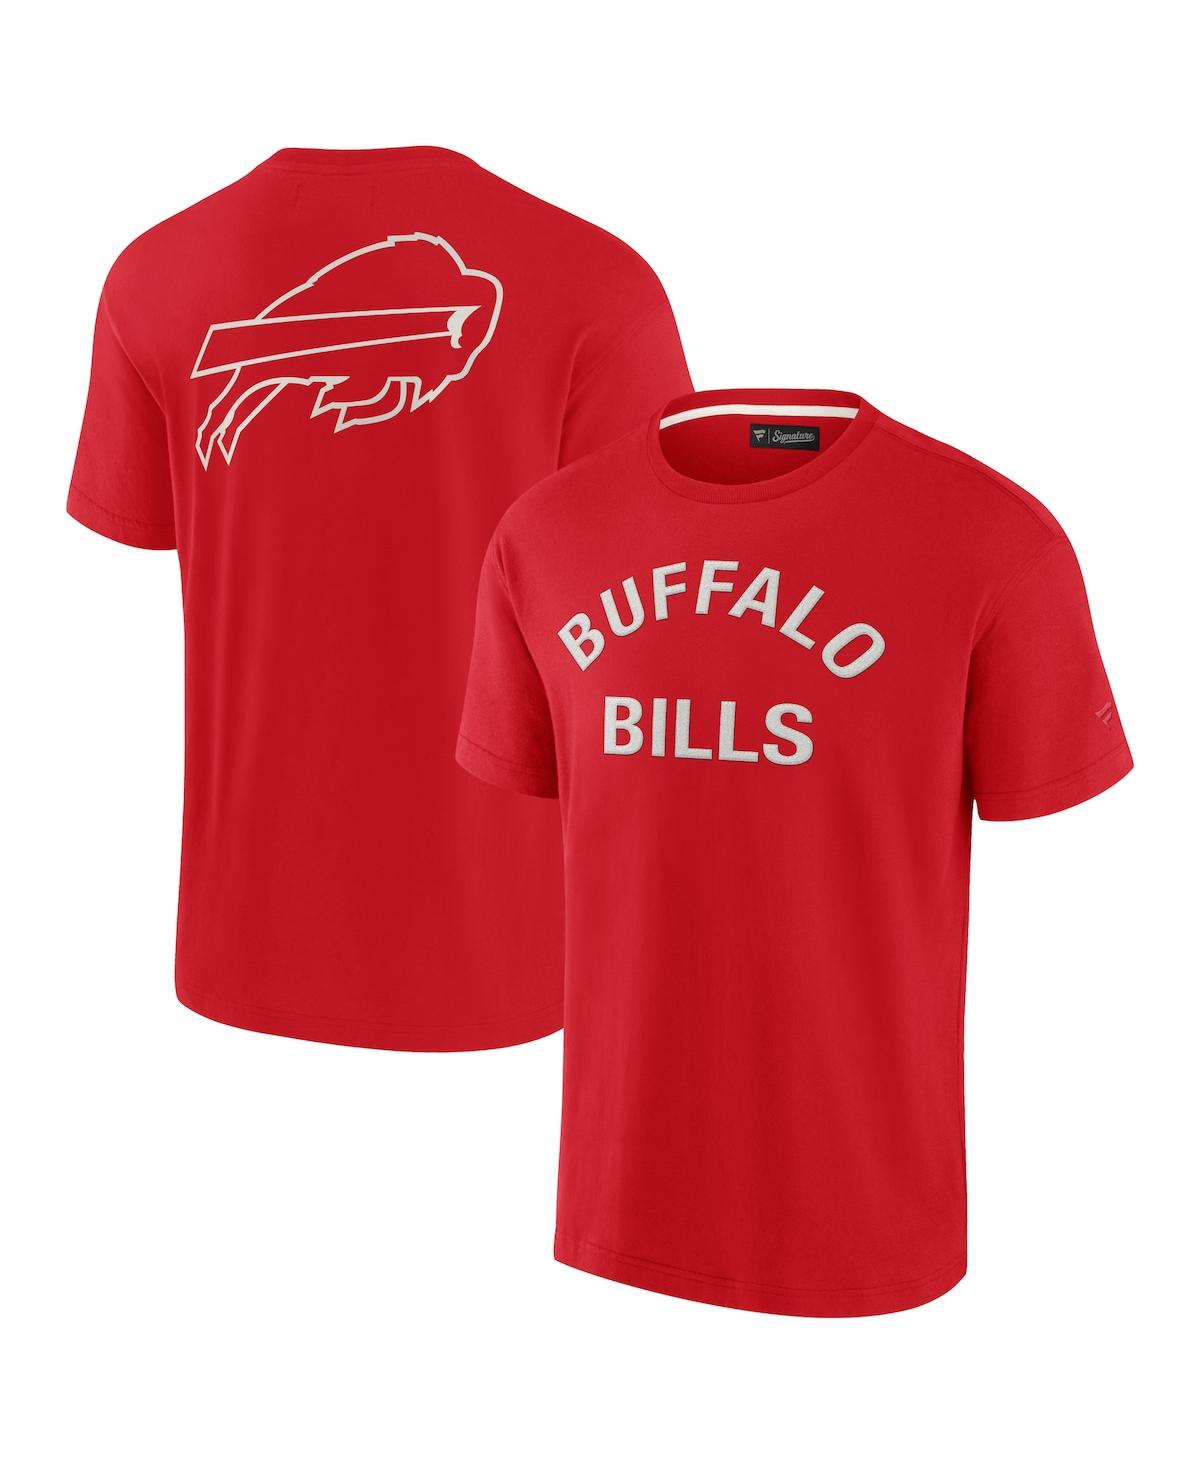 Shop Fanatics Signature Men's And Women's  Red Buffalo Bills Super Soft Short Sleeve T-shirt